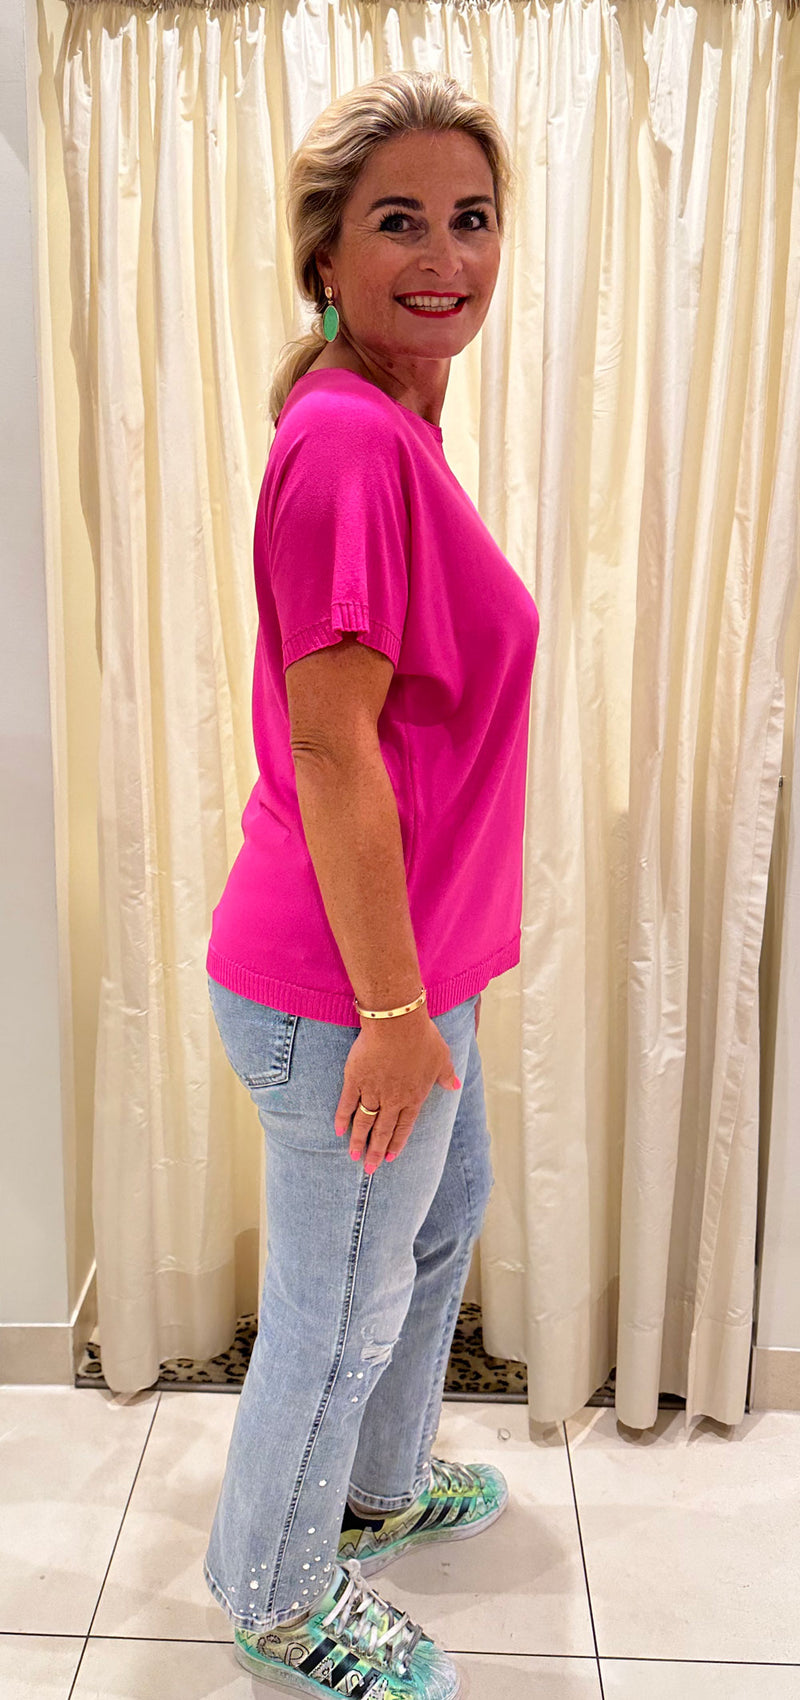 Shirt Pink